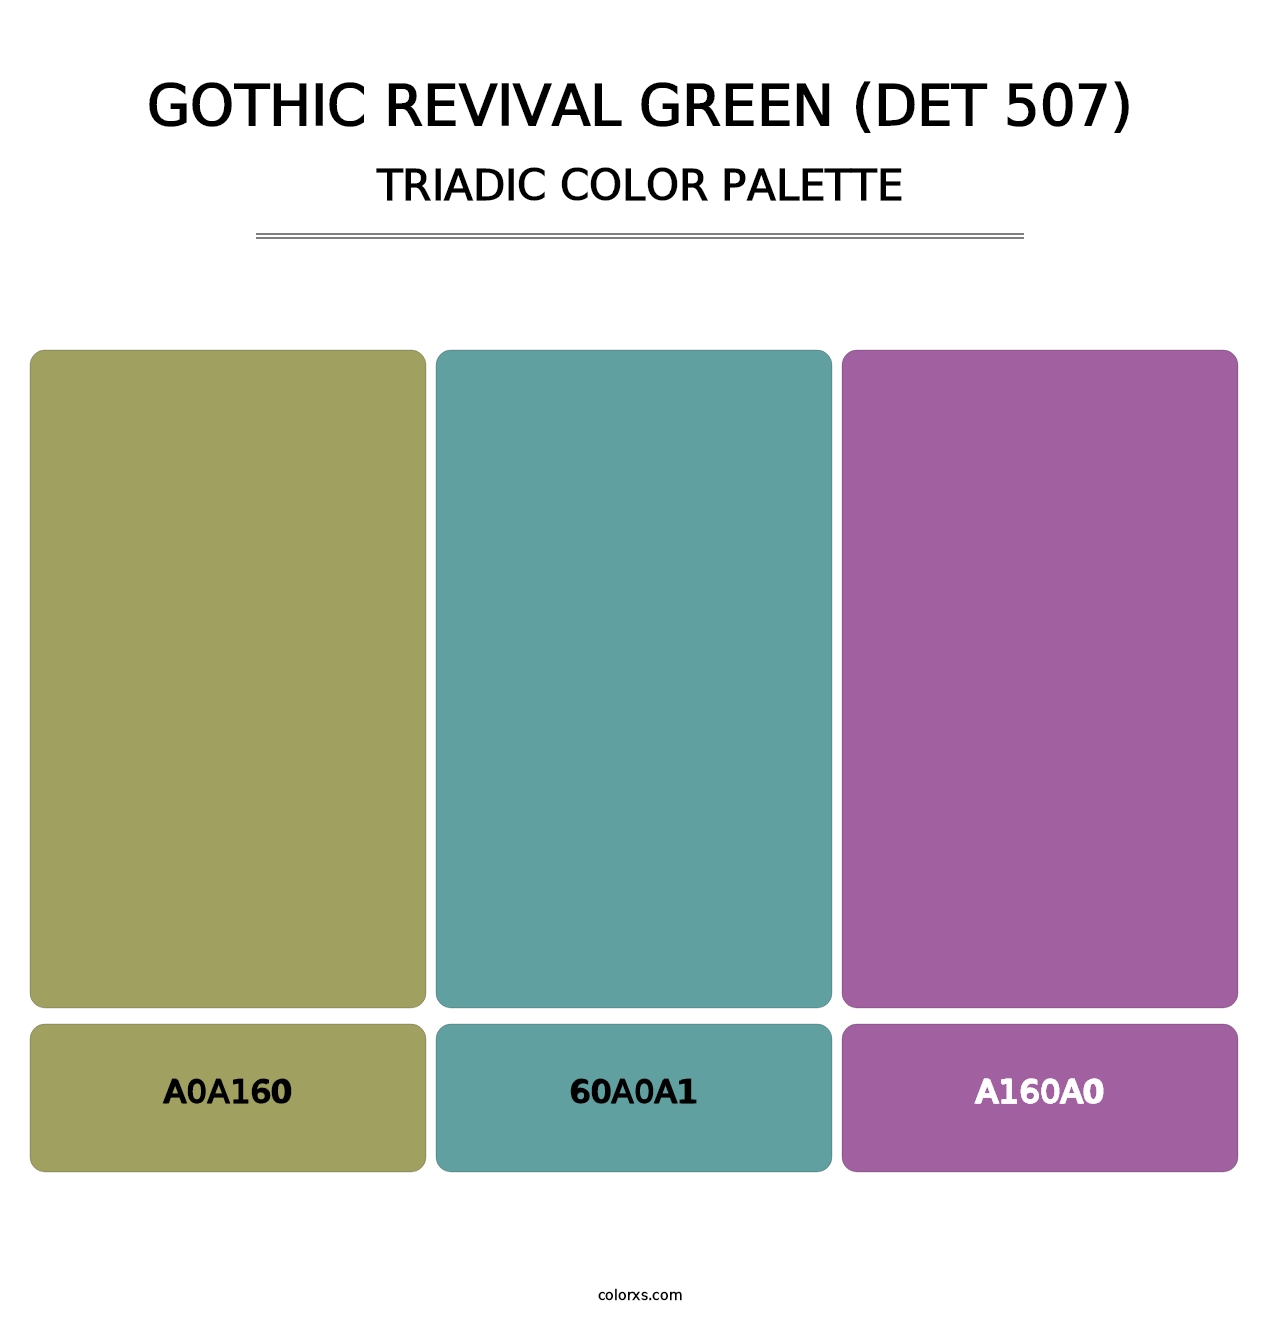 Gothic Revival Green (DET 507) - Triadic Color Palette